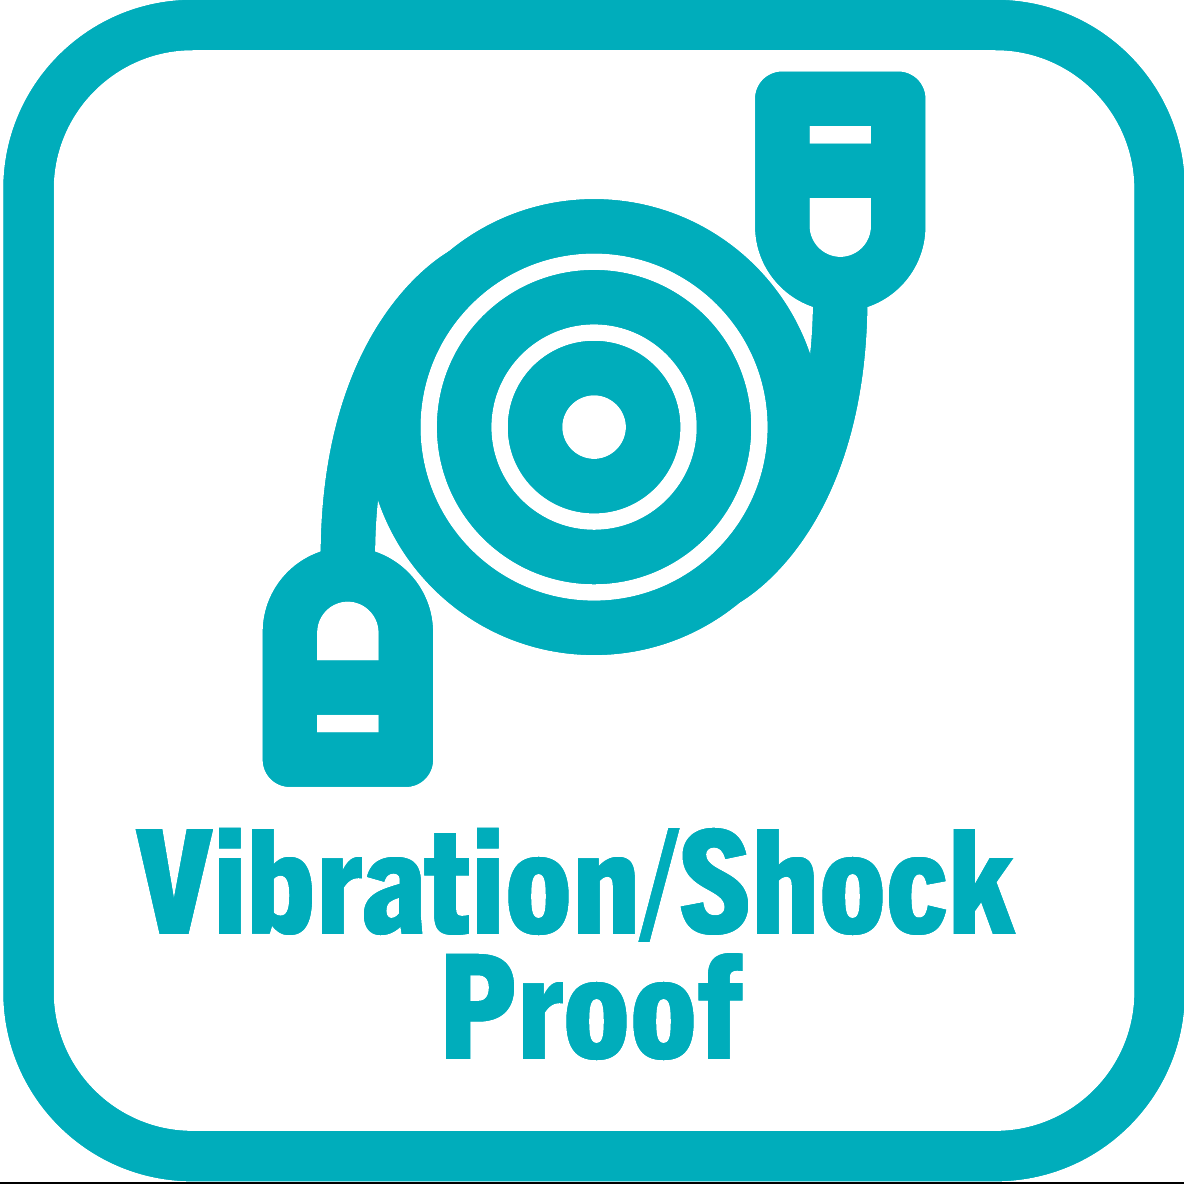 Vibration/Shock Proof